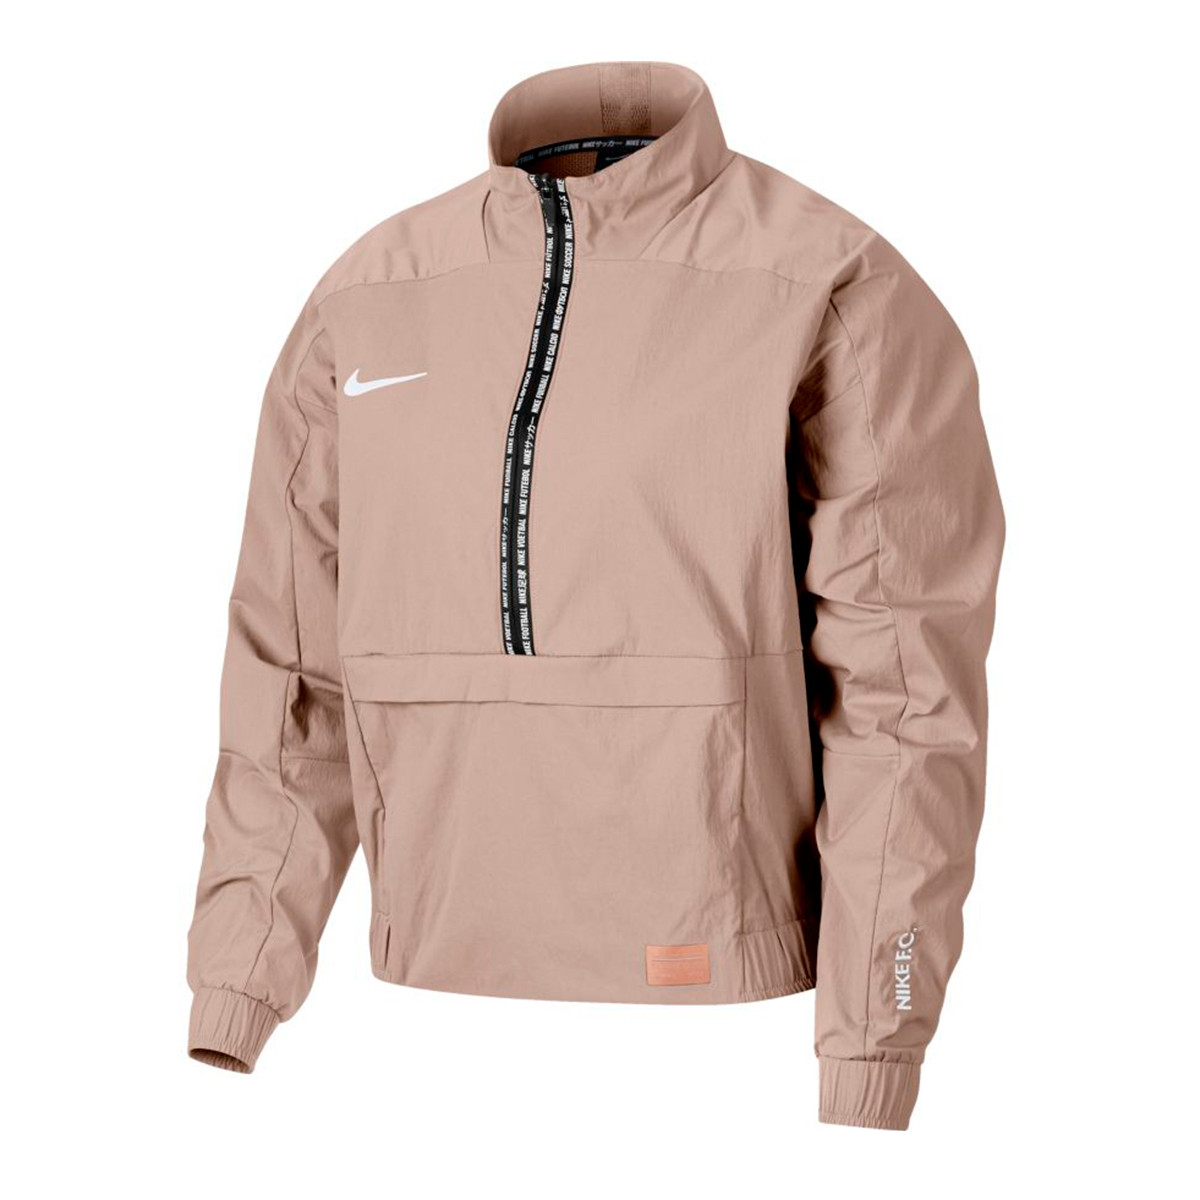 Jacket Nike Dry Nike F.C. Midlayer QZ 